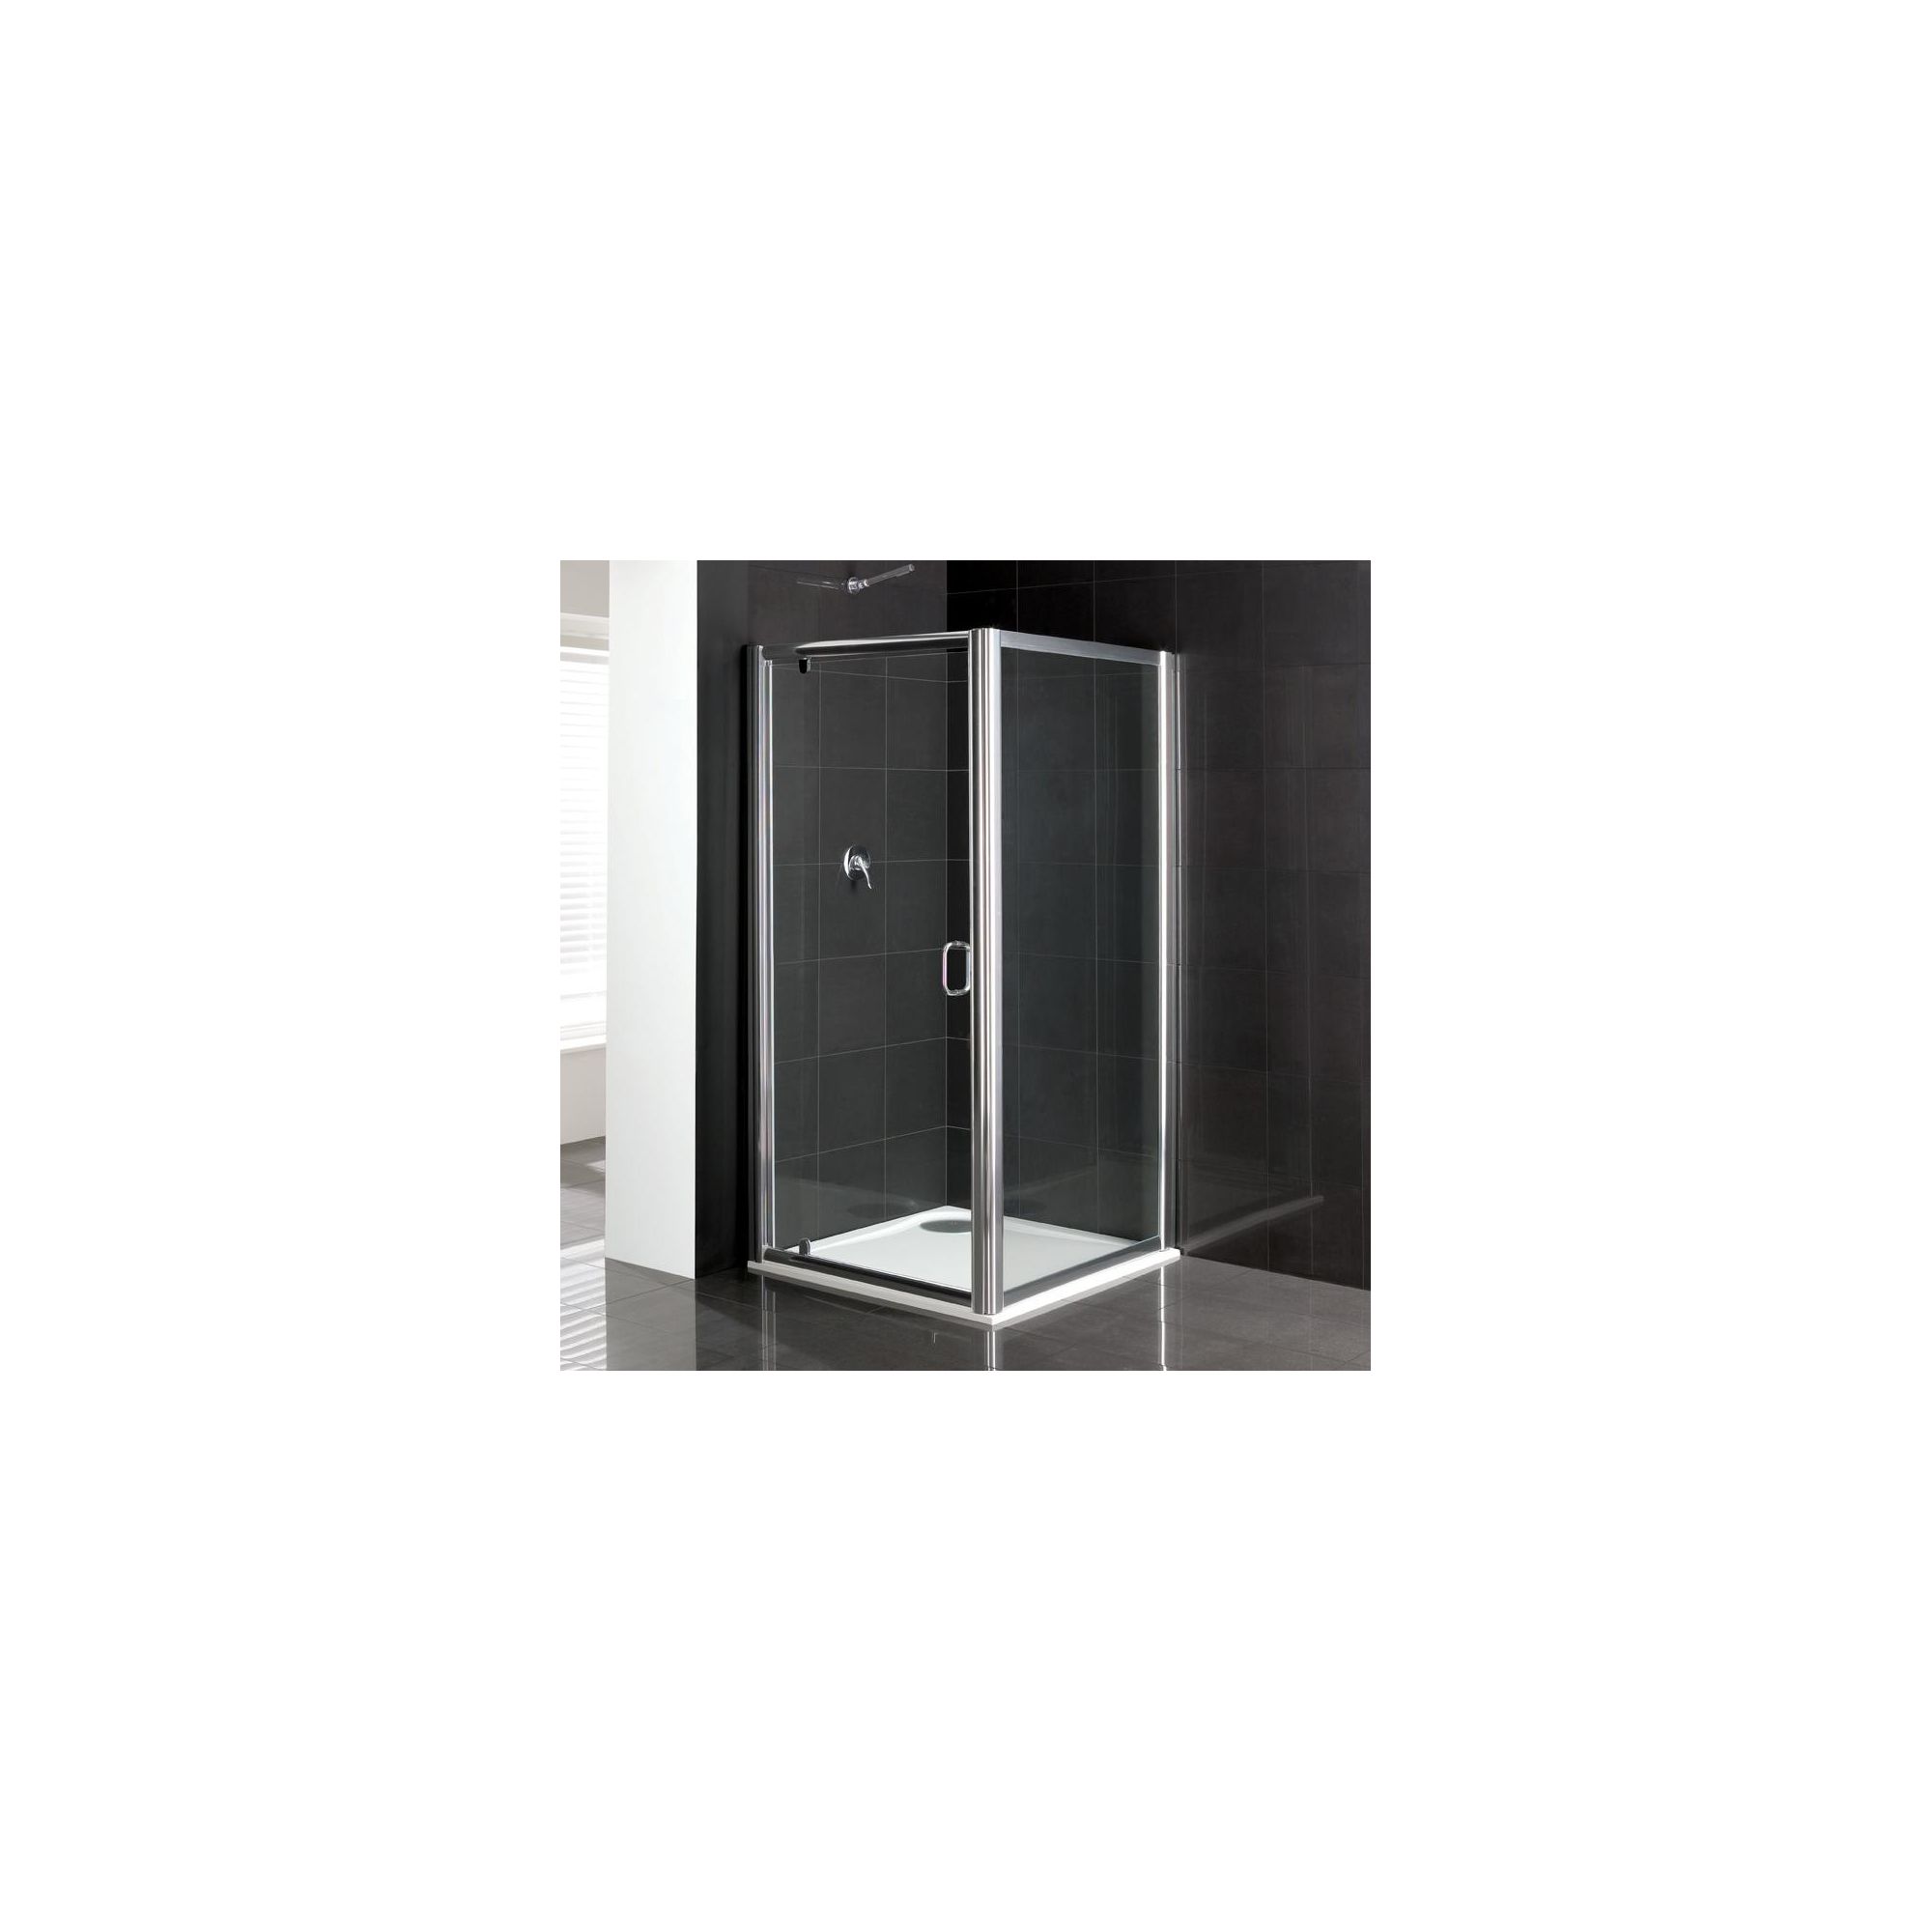 Duchy Elite Silver Pivot Door Shower Enclosure, 800mm x 700mm, Standard Tray, 6mm Glass at Tescos Direct